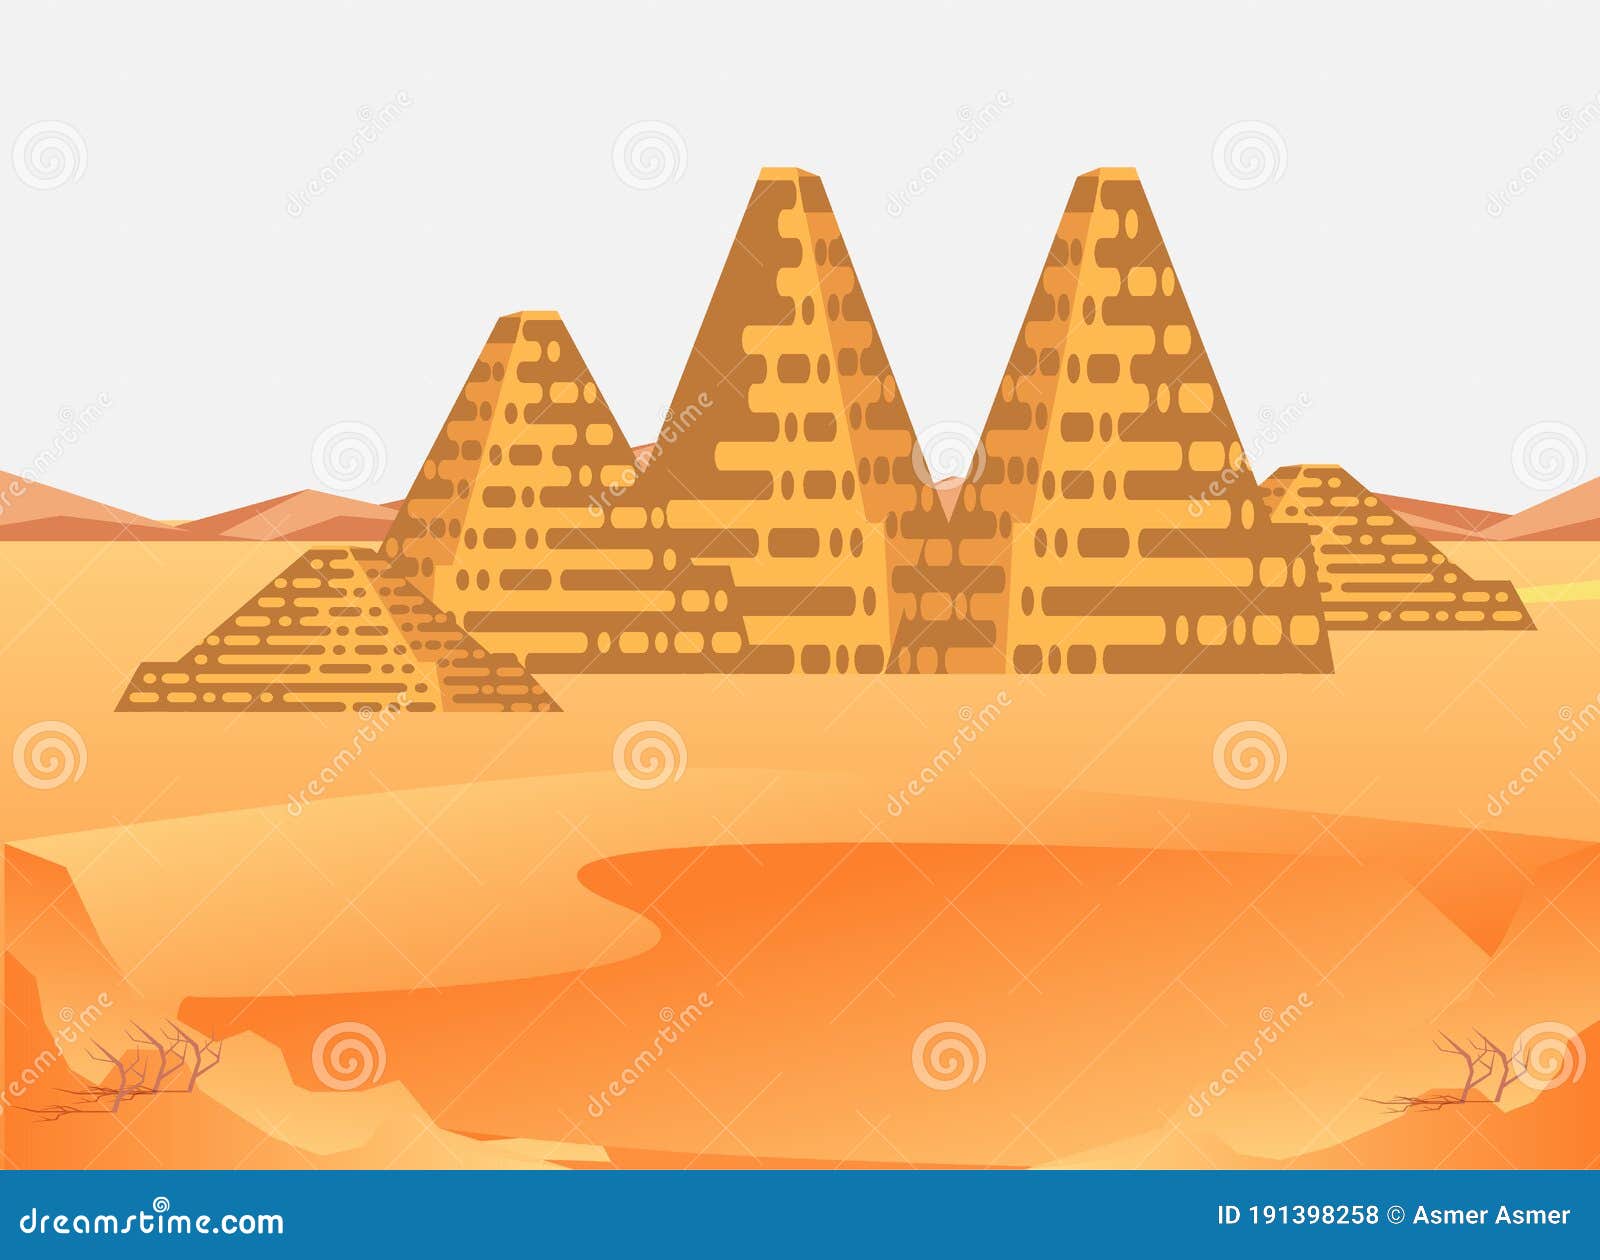 Visiting the Pyramids in Summer, Karima Sudan Stock Vector ...